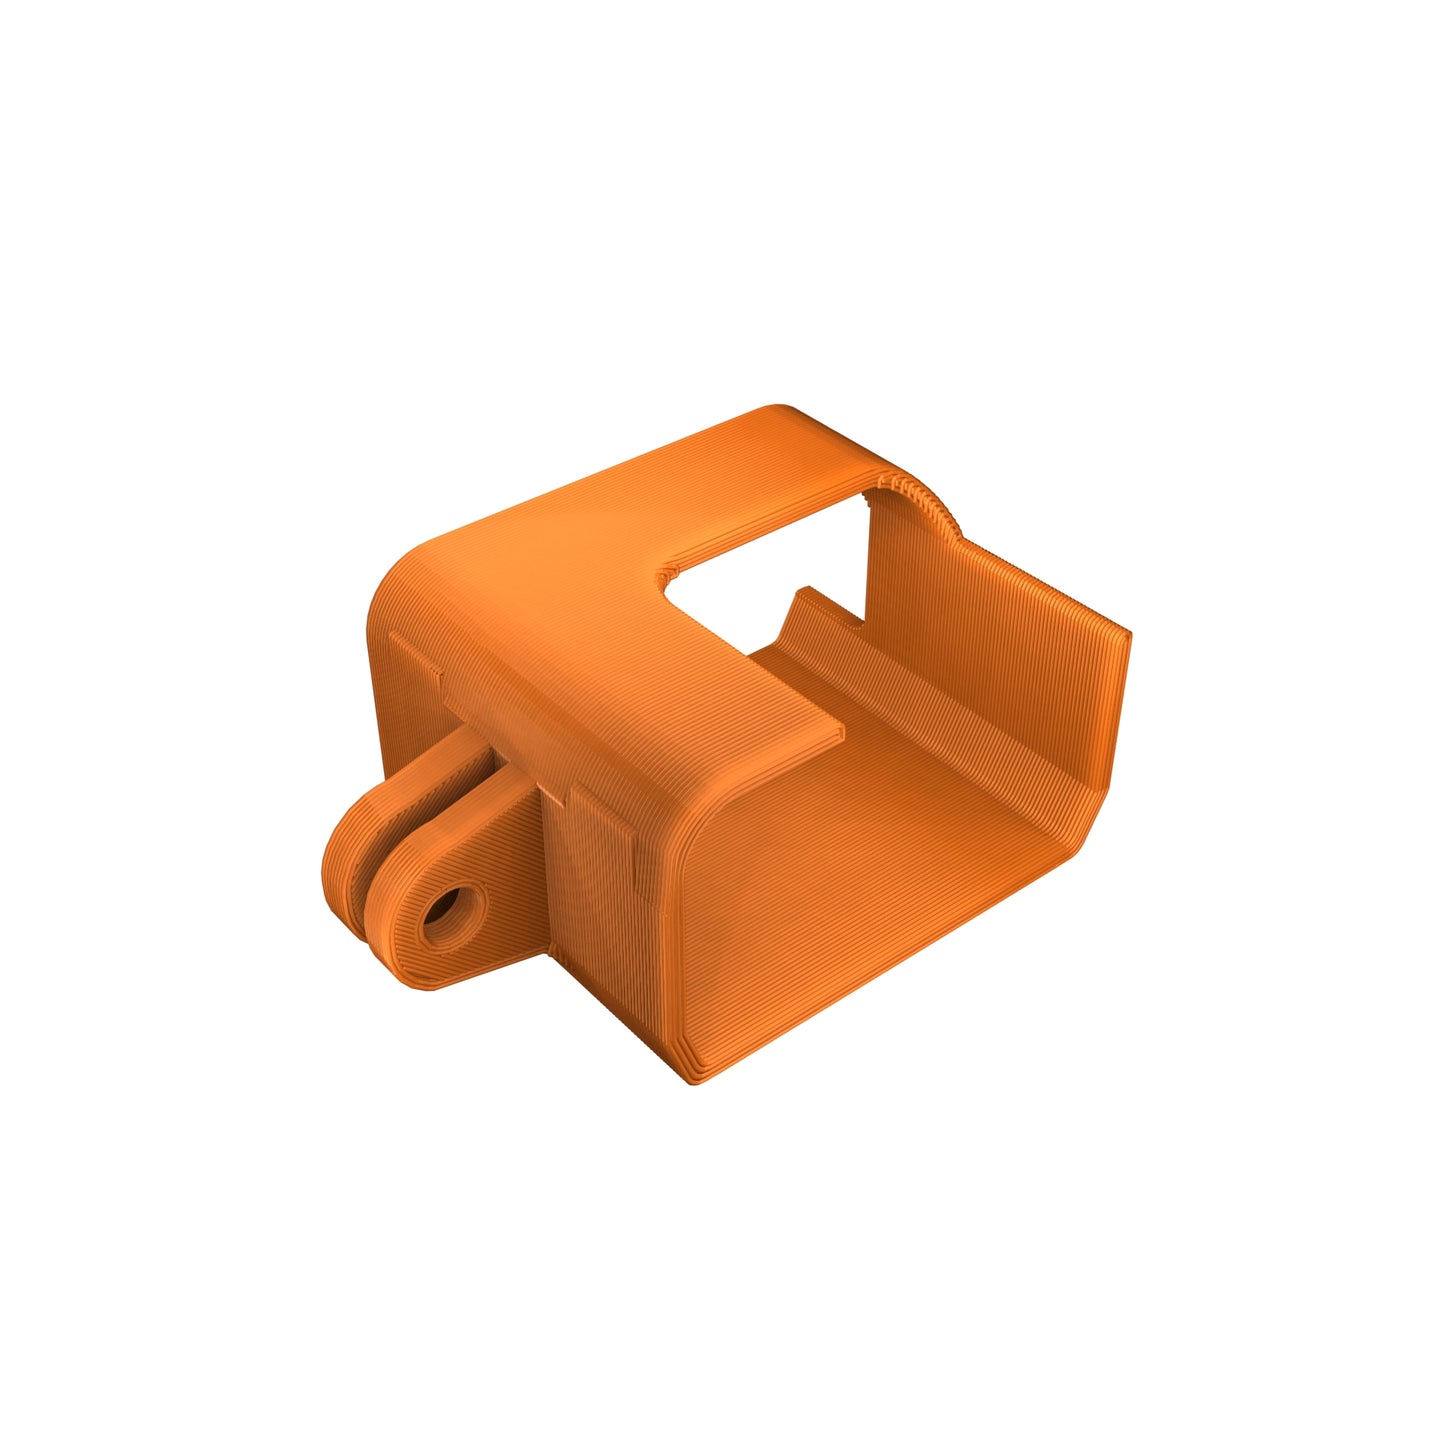 GoPro Hero 5 6 7 TPU FPV Case Orange Protection Holder for GoPro Camera